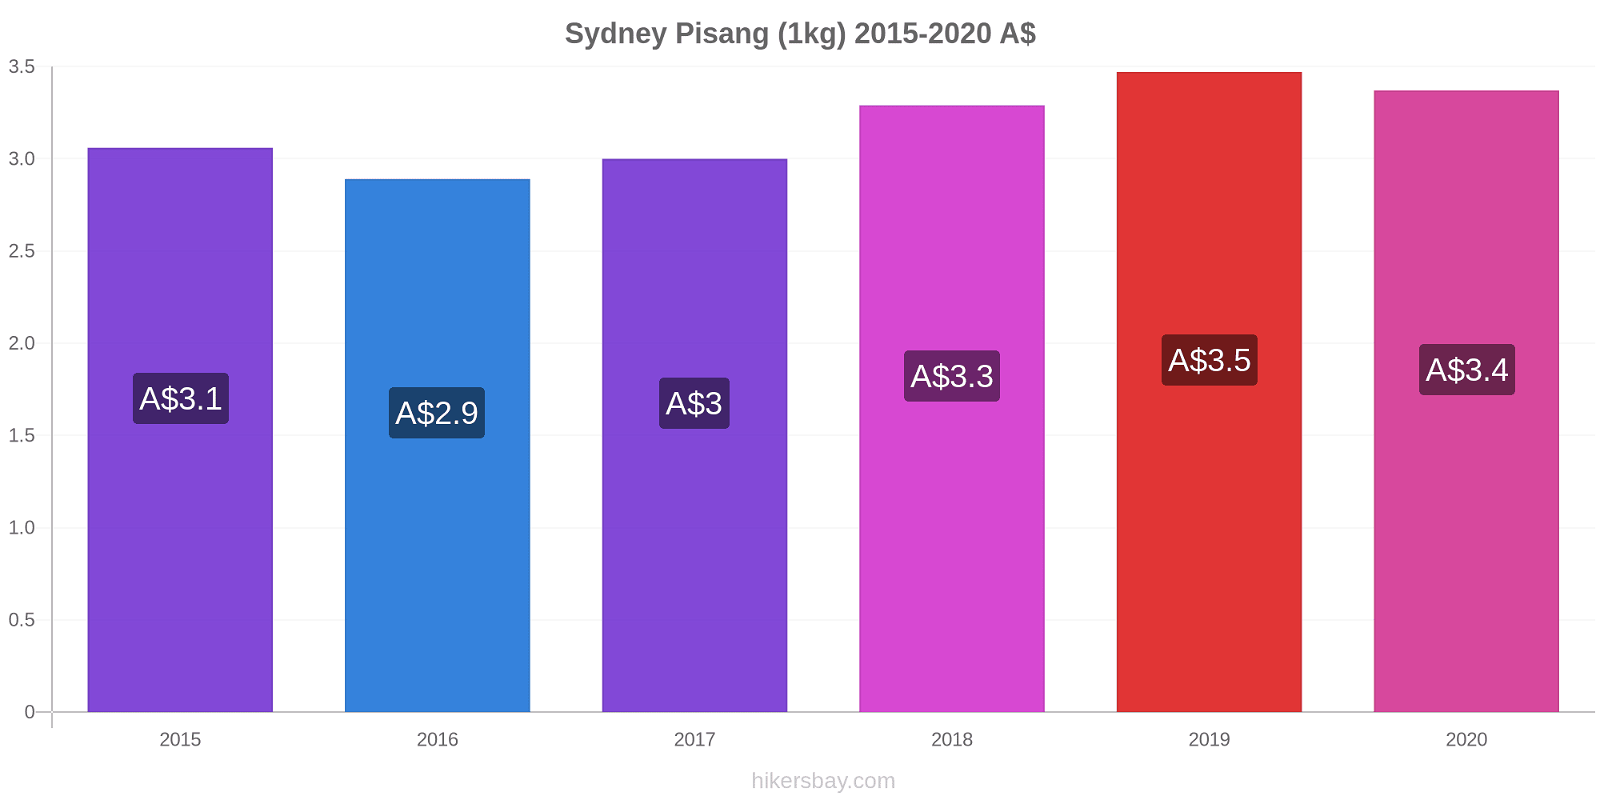 Sydney perubahan harga Pisang (1kg) hikersbay.com